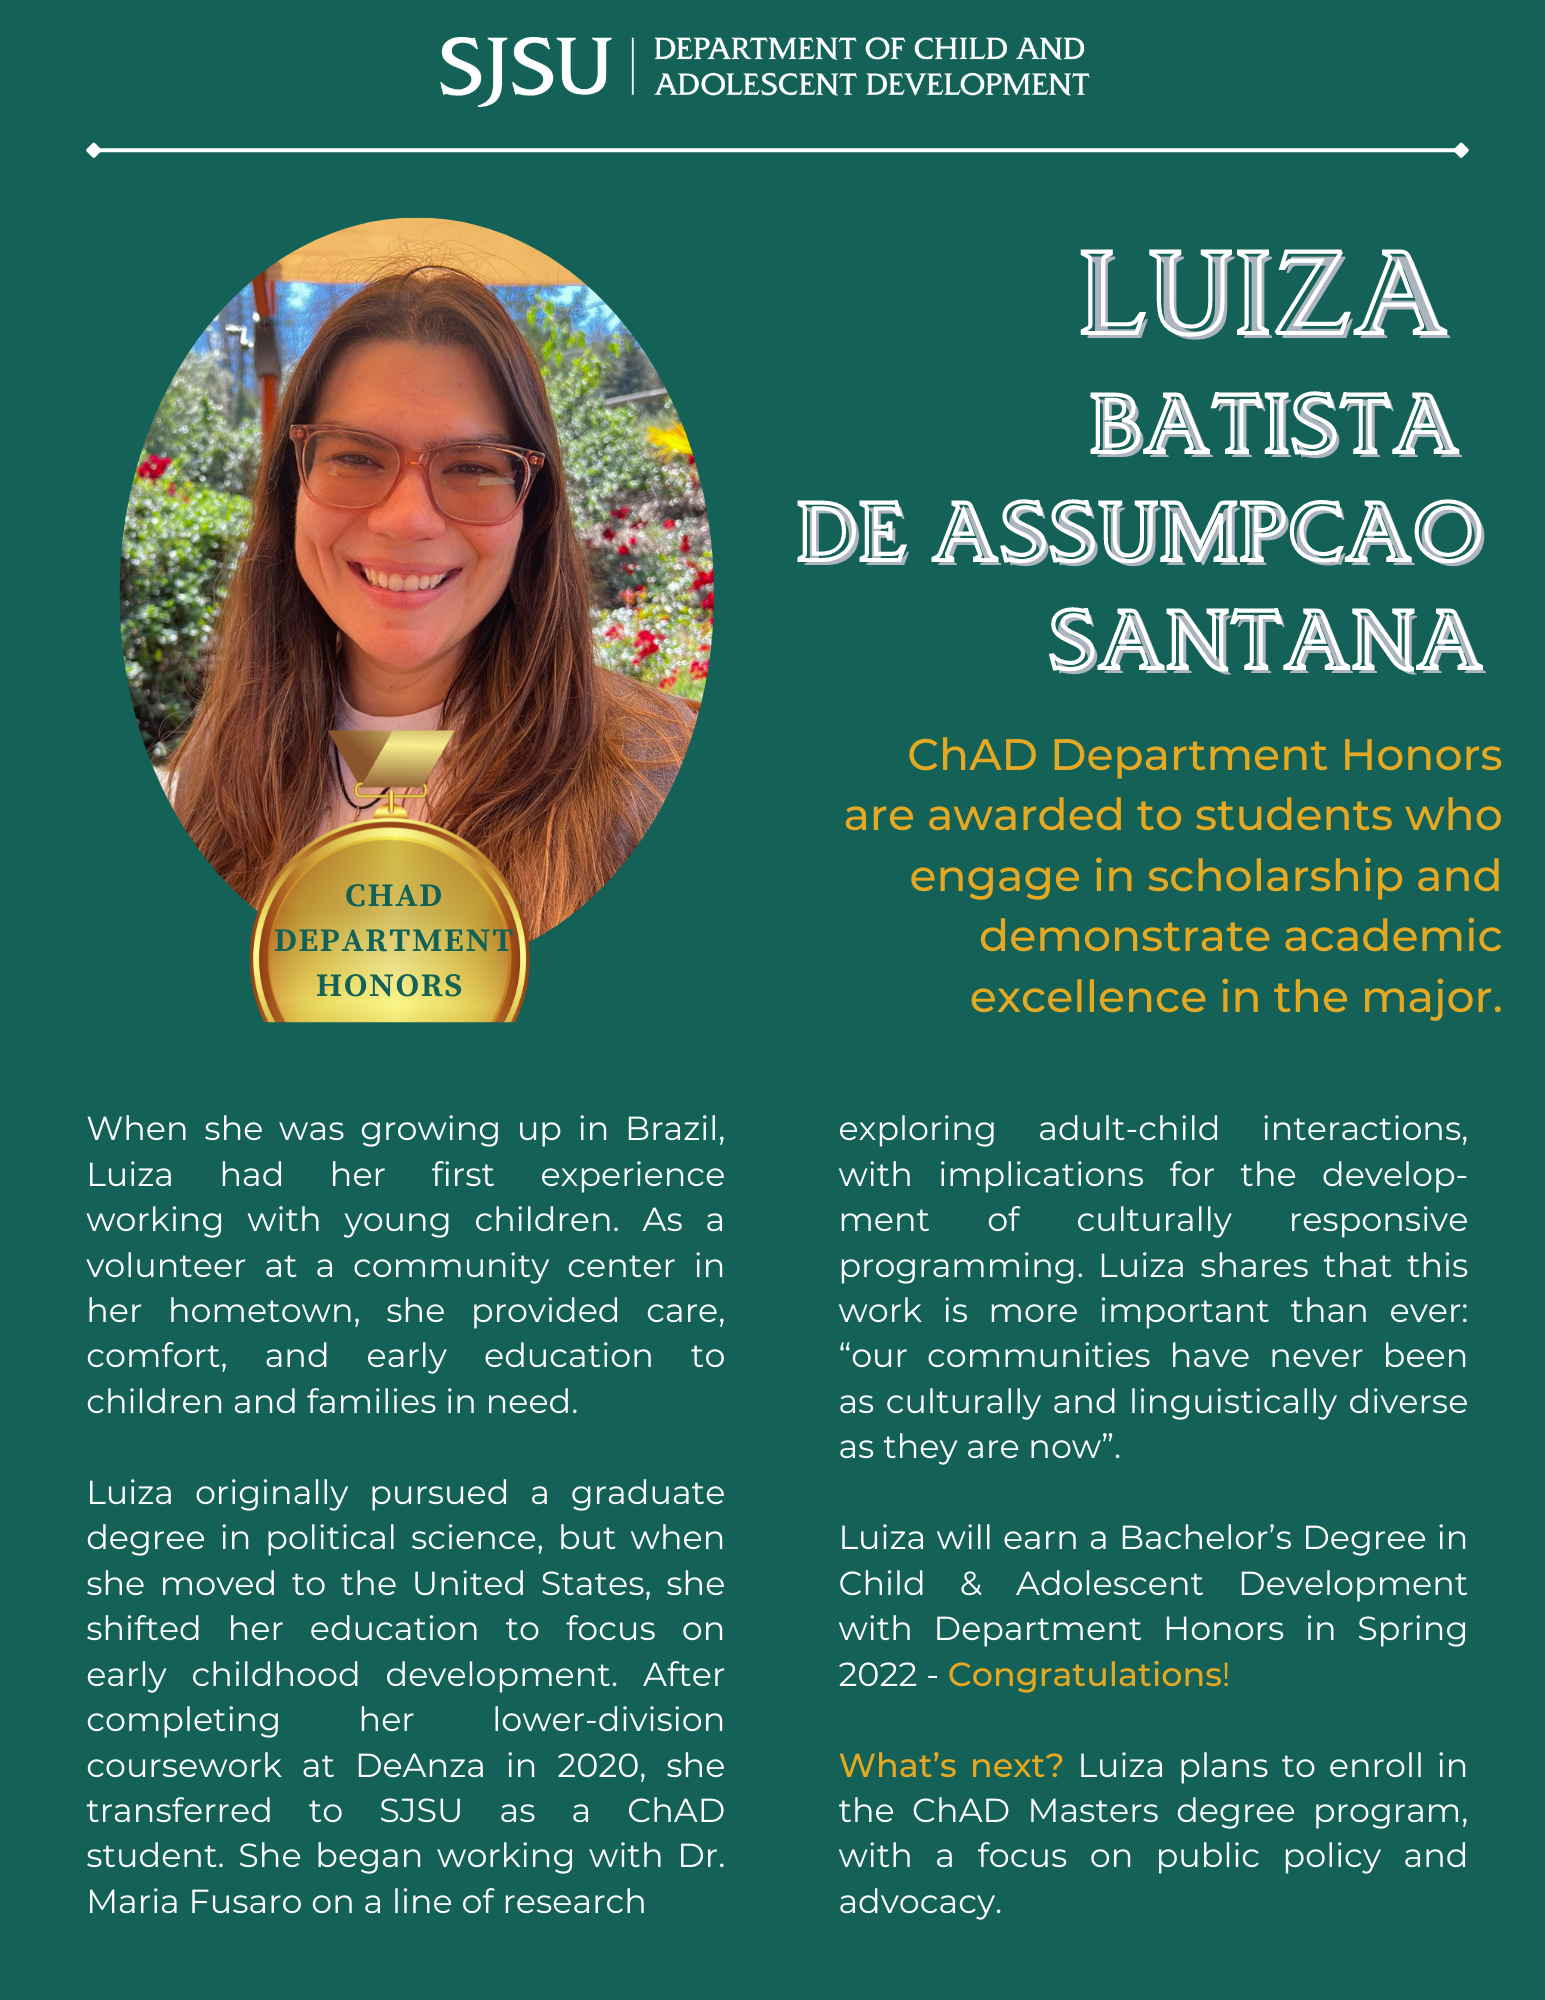 Luiza Batista De Assumpcao Santana, 2022 ChAD Honors Student